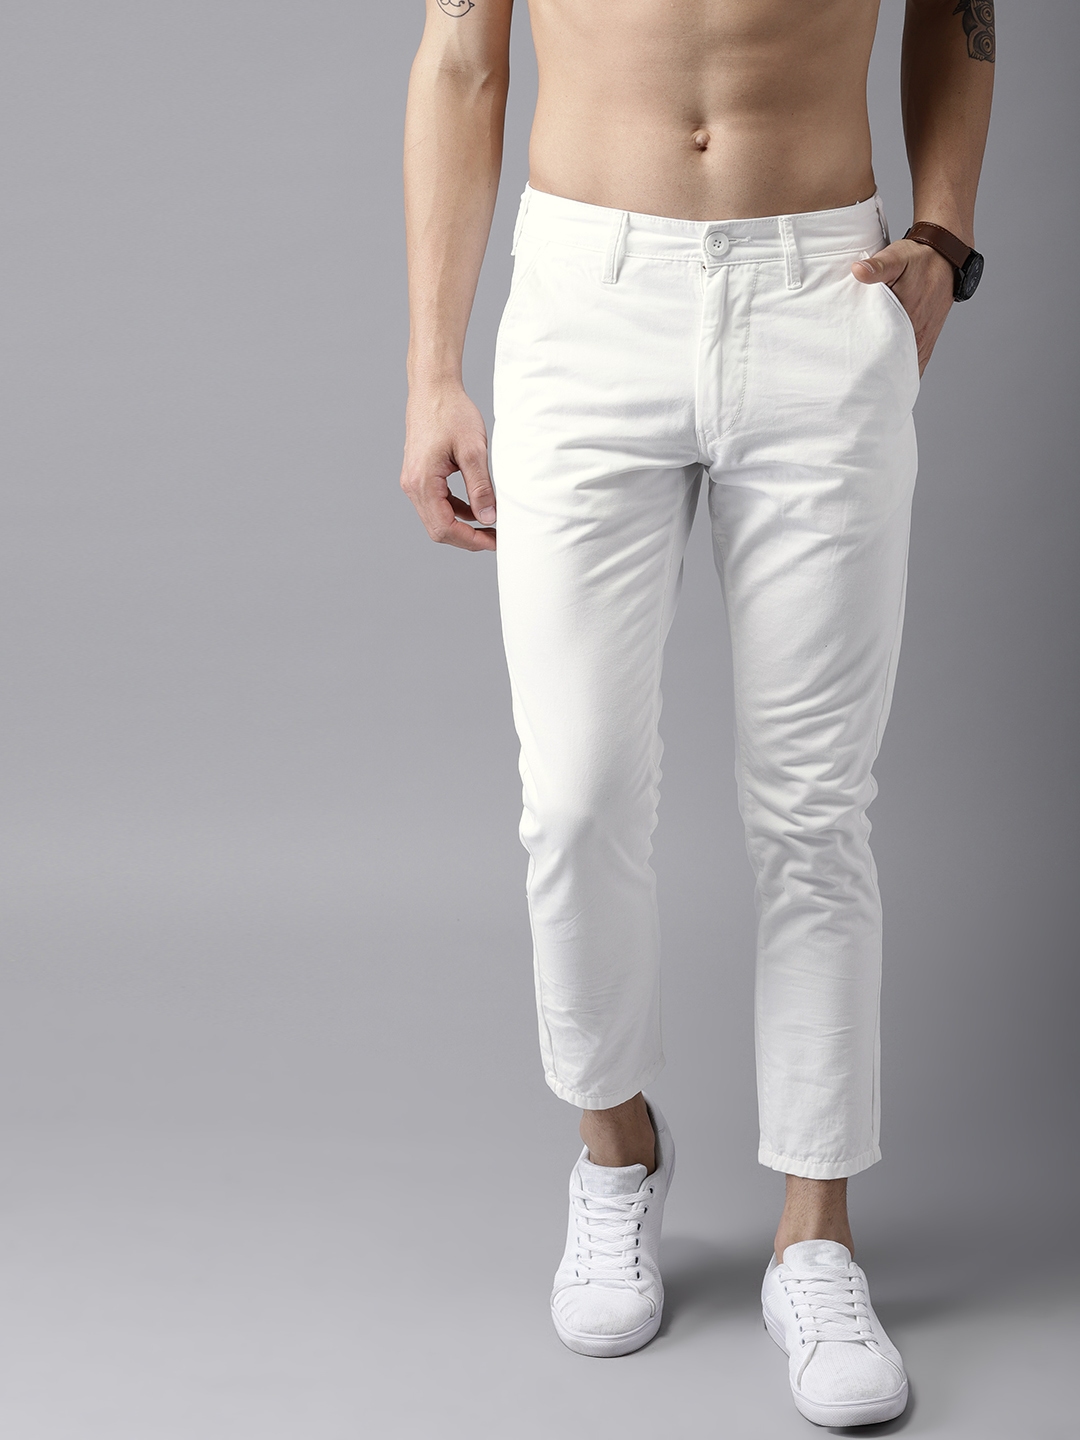 white chino pants slim fit